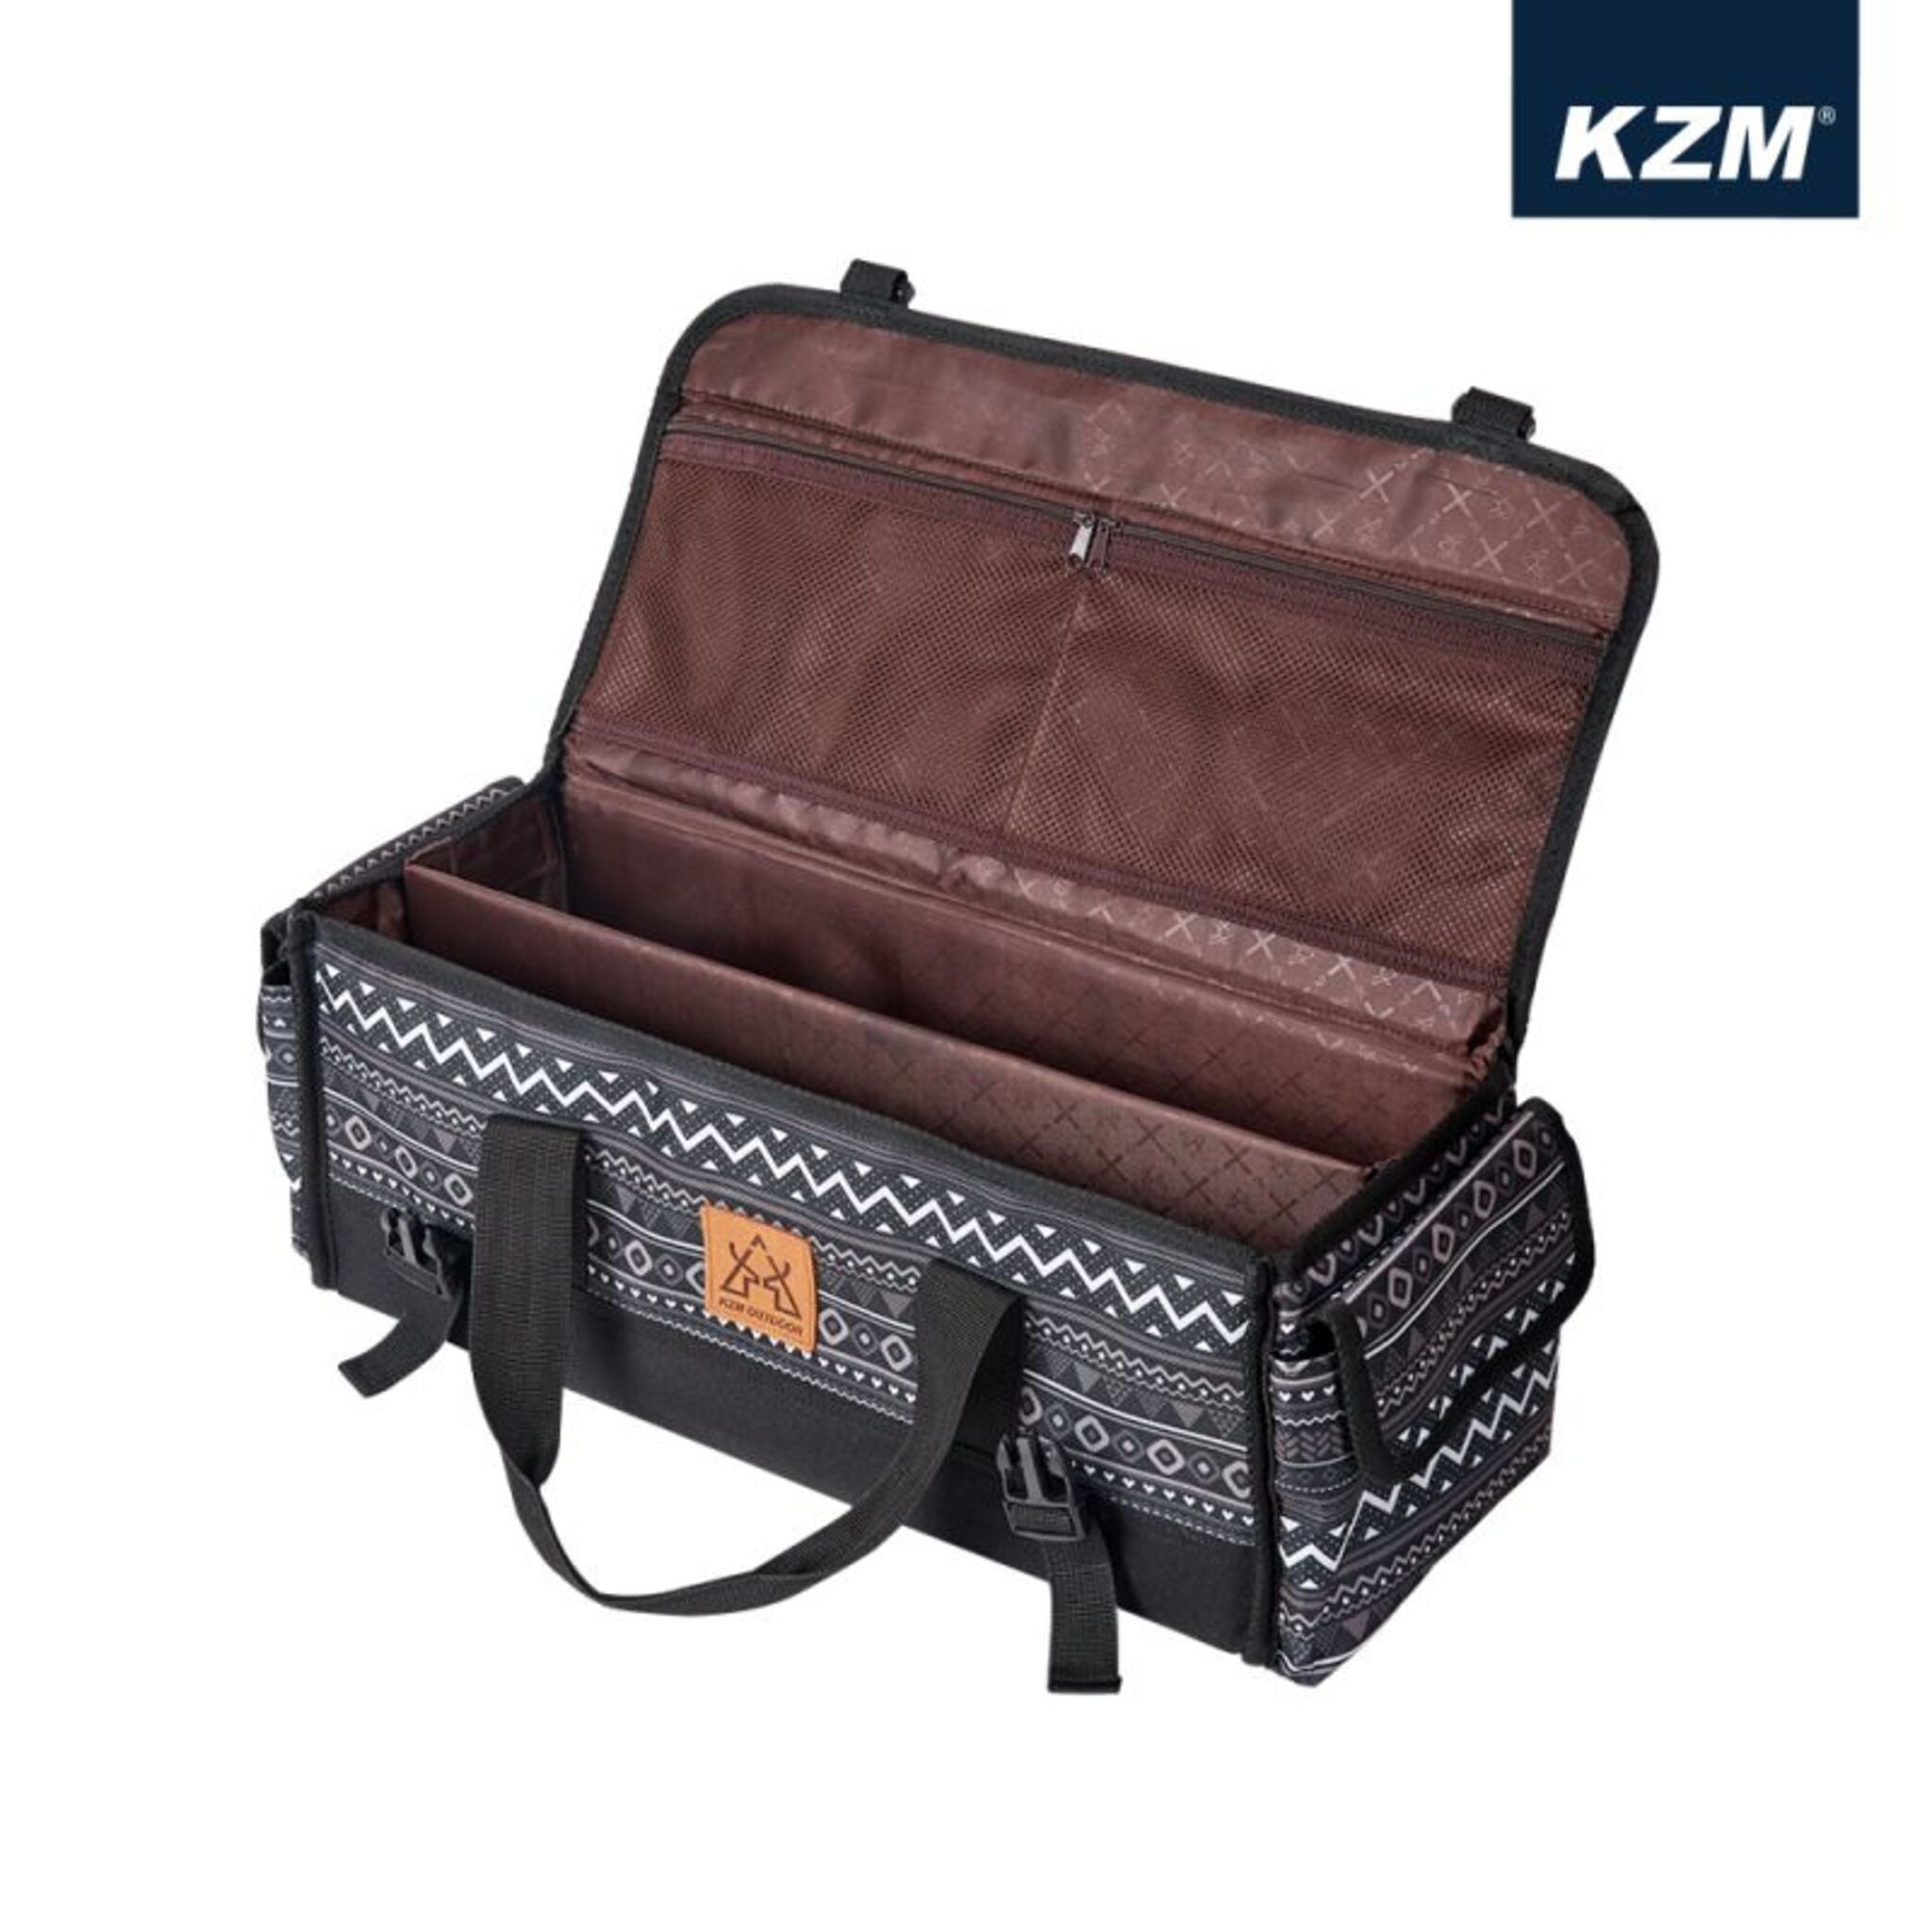 KZM 彩繪民族風工具收納袋(黑色) K9T3B003